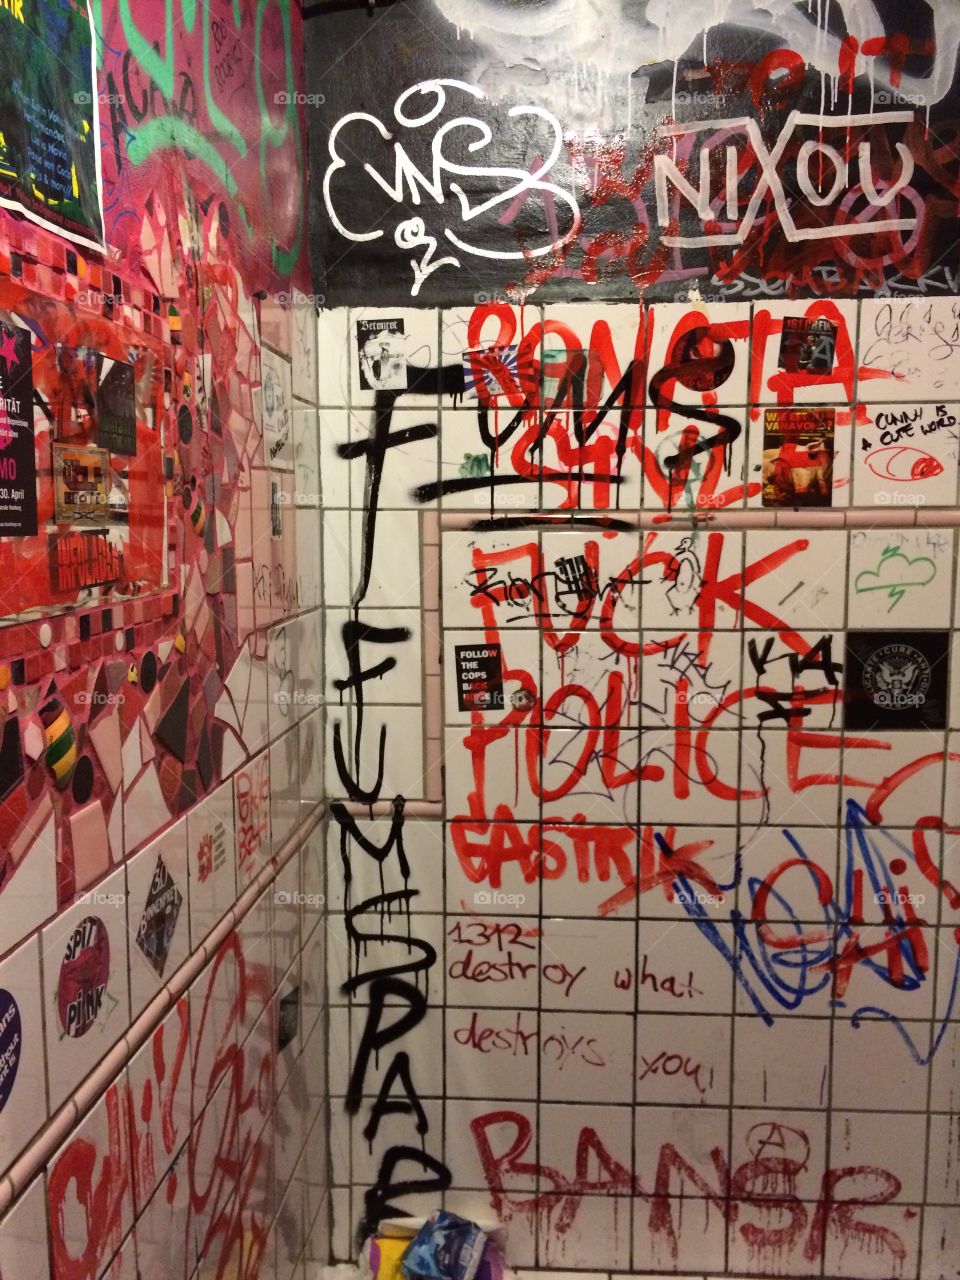 Squat bar toilet graffiti, Amsterdam, 2016